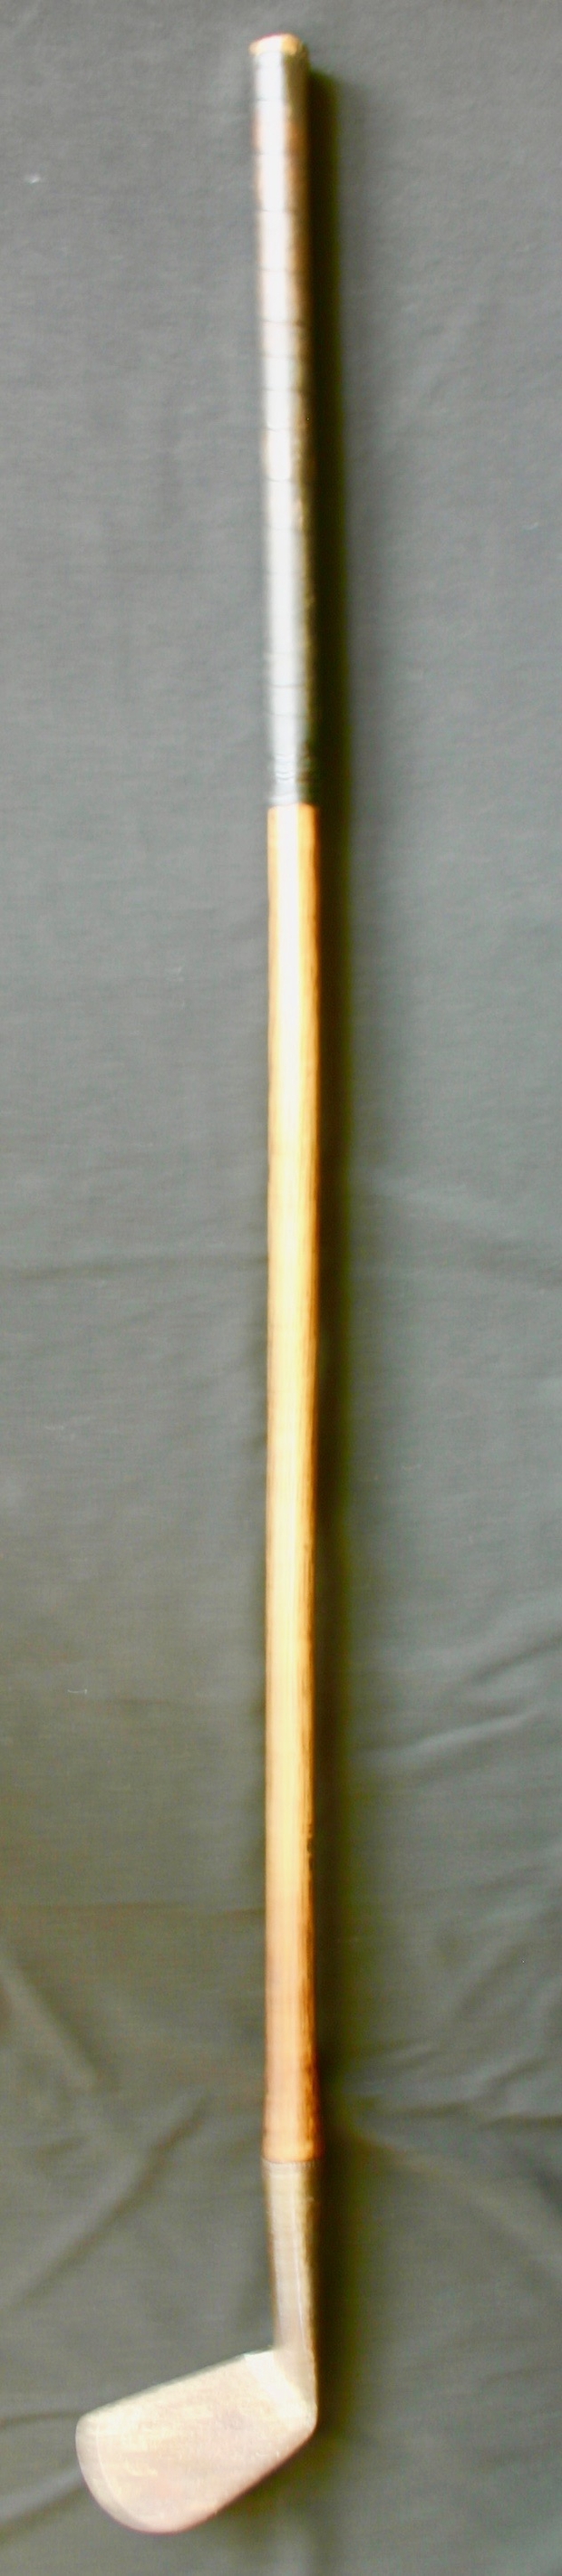 Golf club-metal head -wrapped wooden shaft